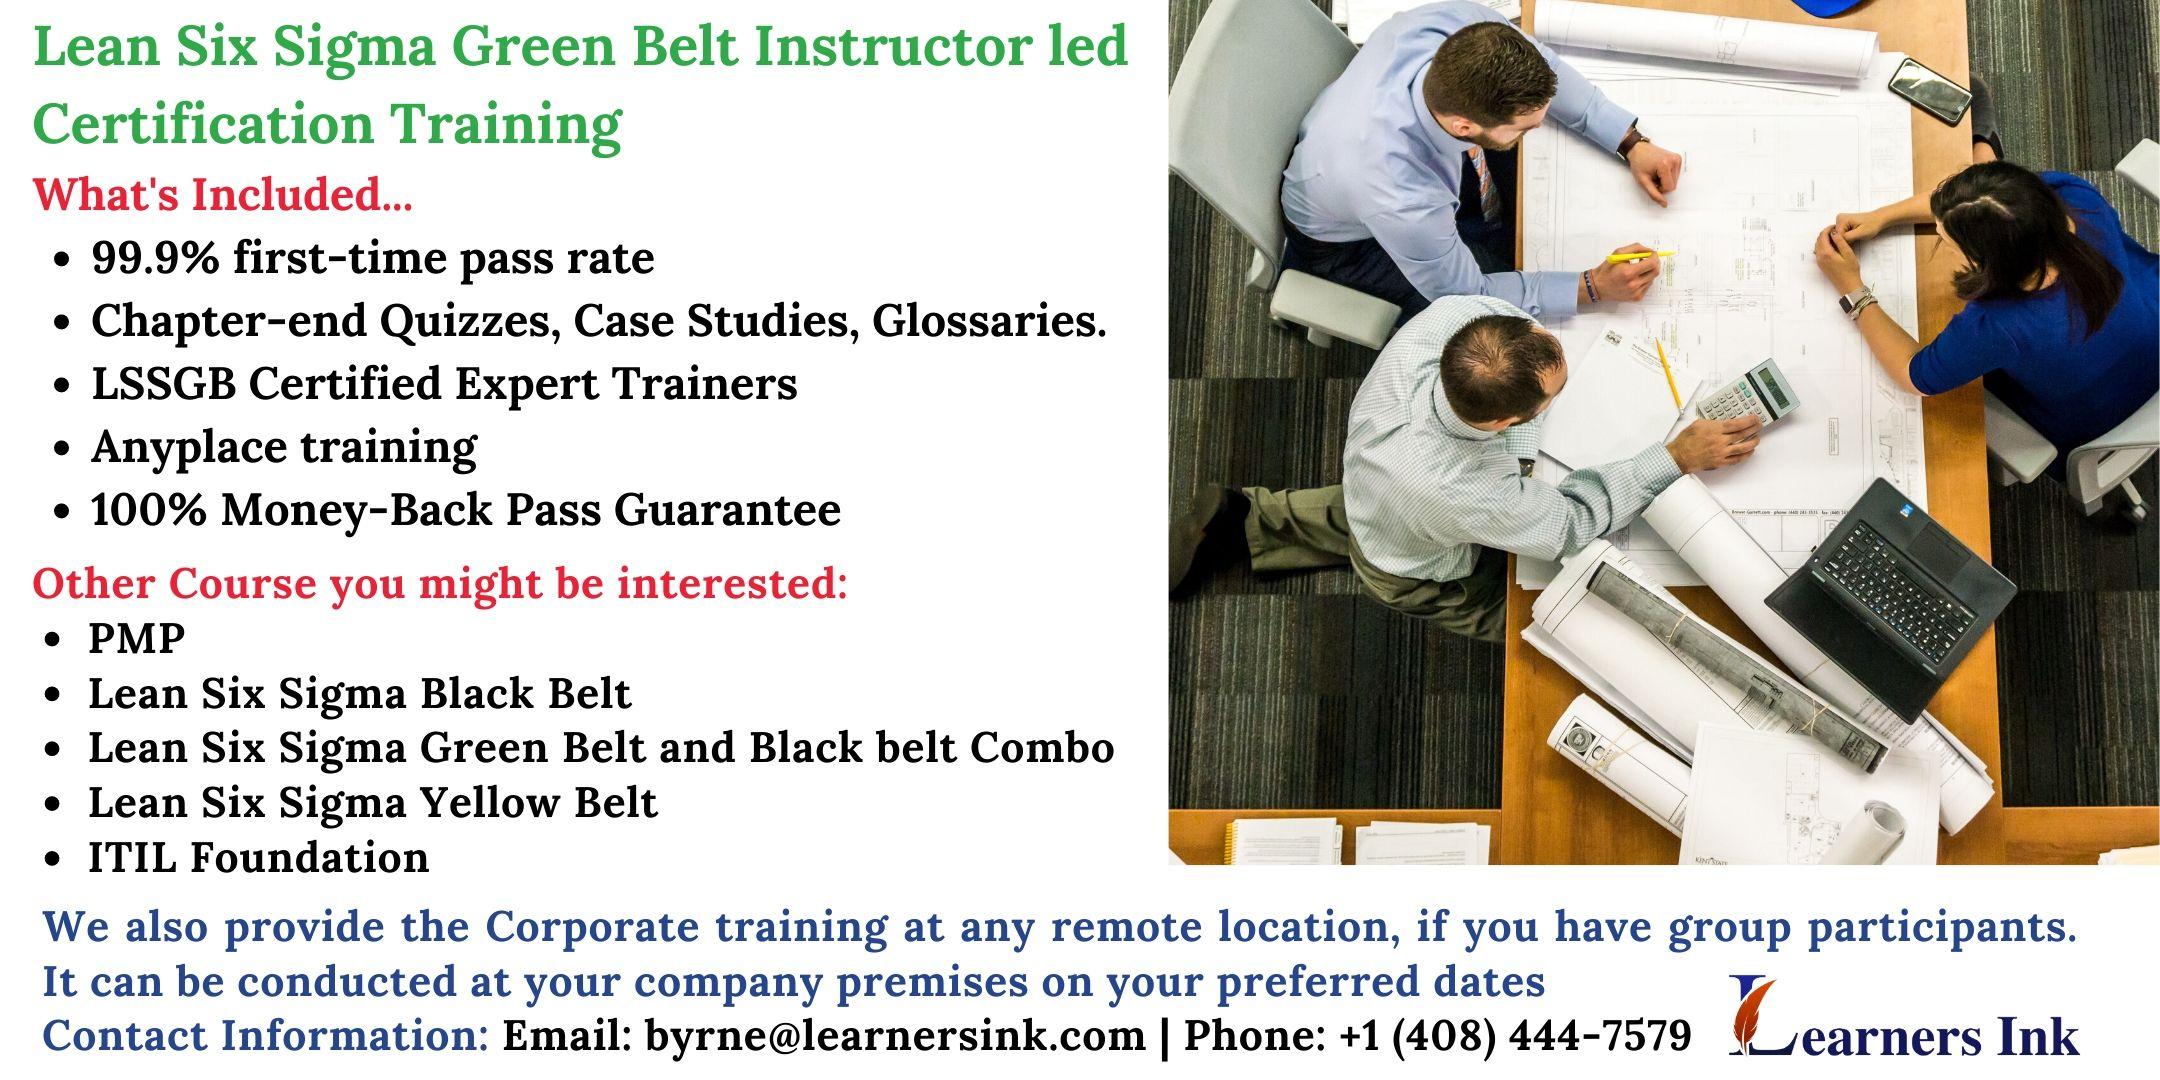 Lean Six Sigma Green Belt Certification Training Course (LSSGB) in Santa Clara